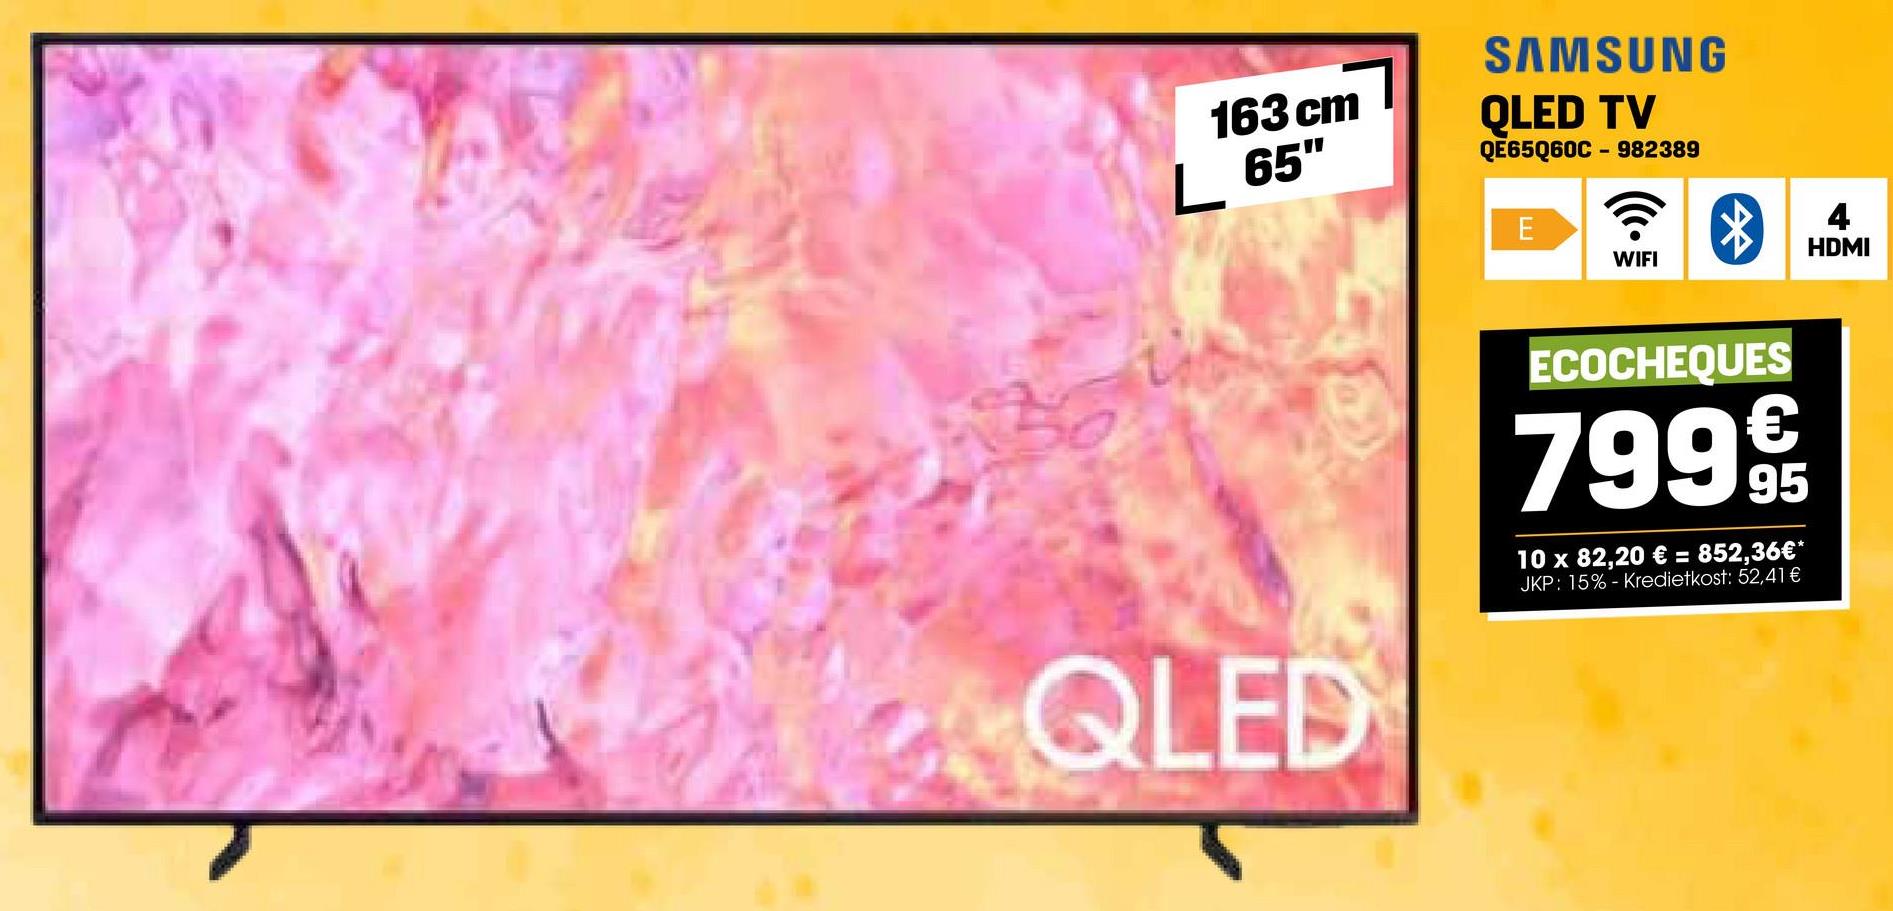 163 cm
L 65"
QLED
SAMSUNG
QLED TV
QE65Q60C-982389
E
WIFI
*
ECOCHEQUES
799€
4
HDMI
95
10 x 82,20 € = 852,36€*
JKP: 15% - Kredietkost: 52,41 €